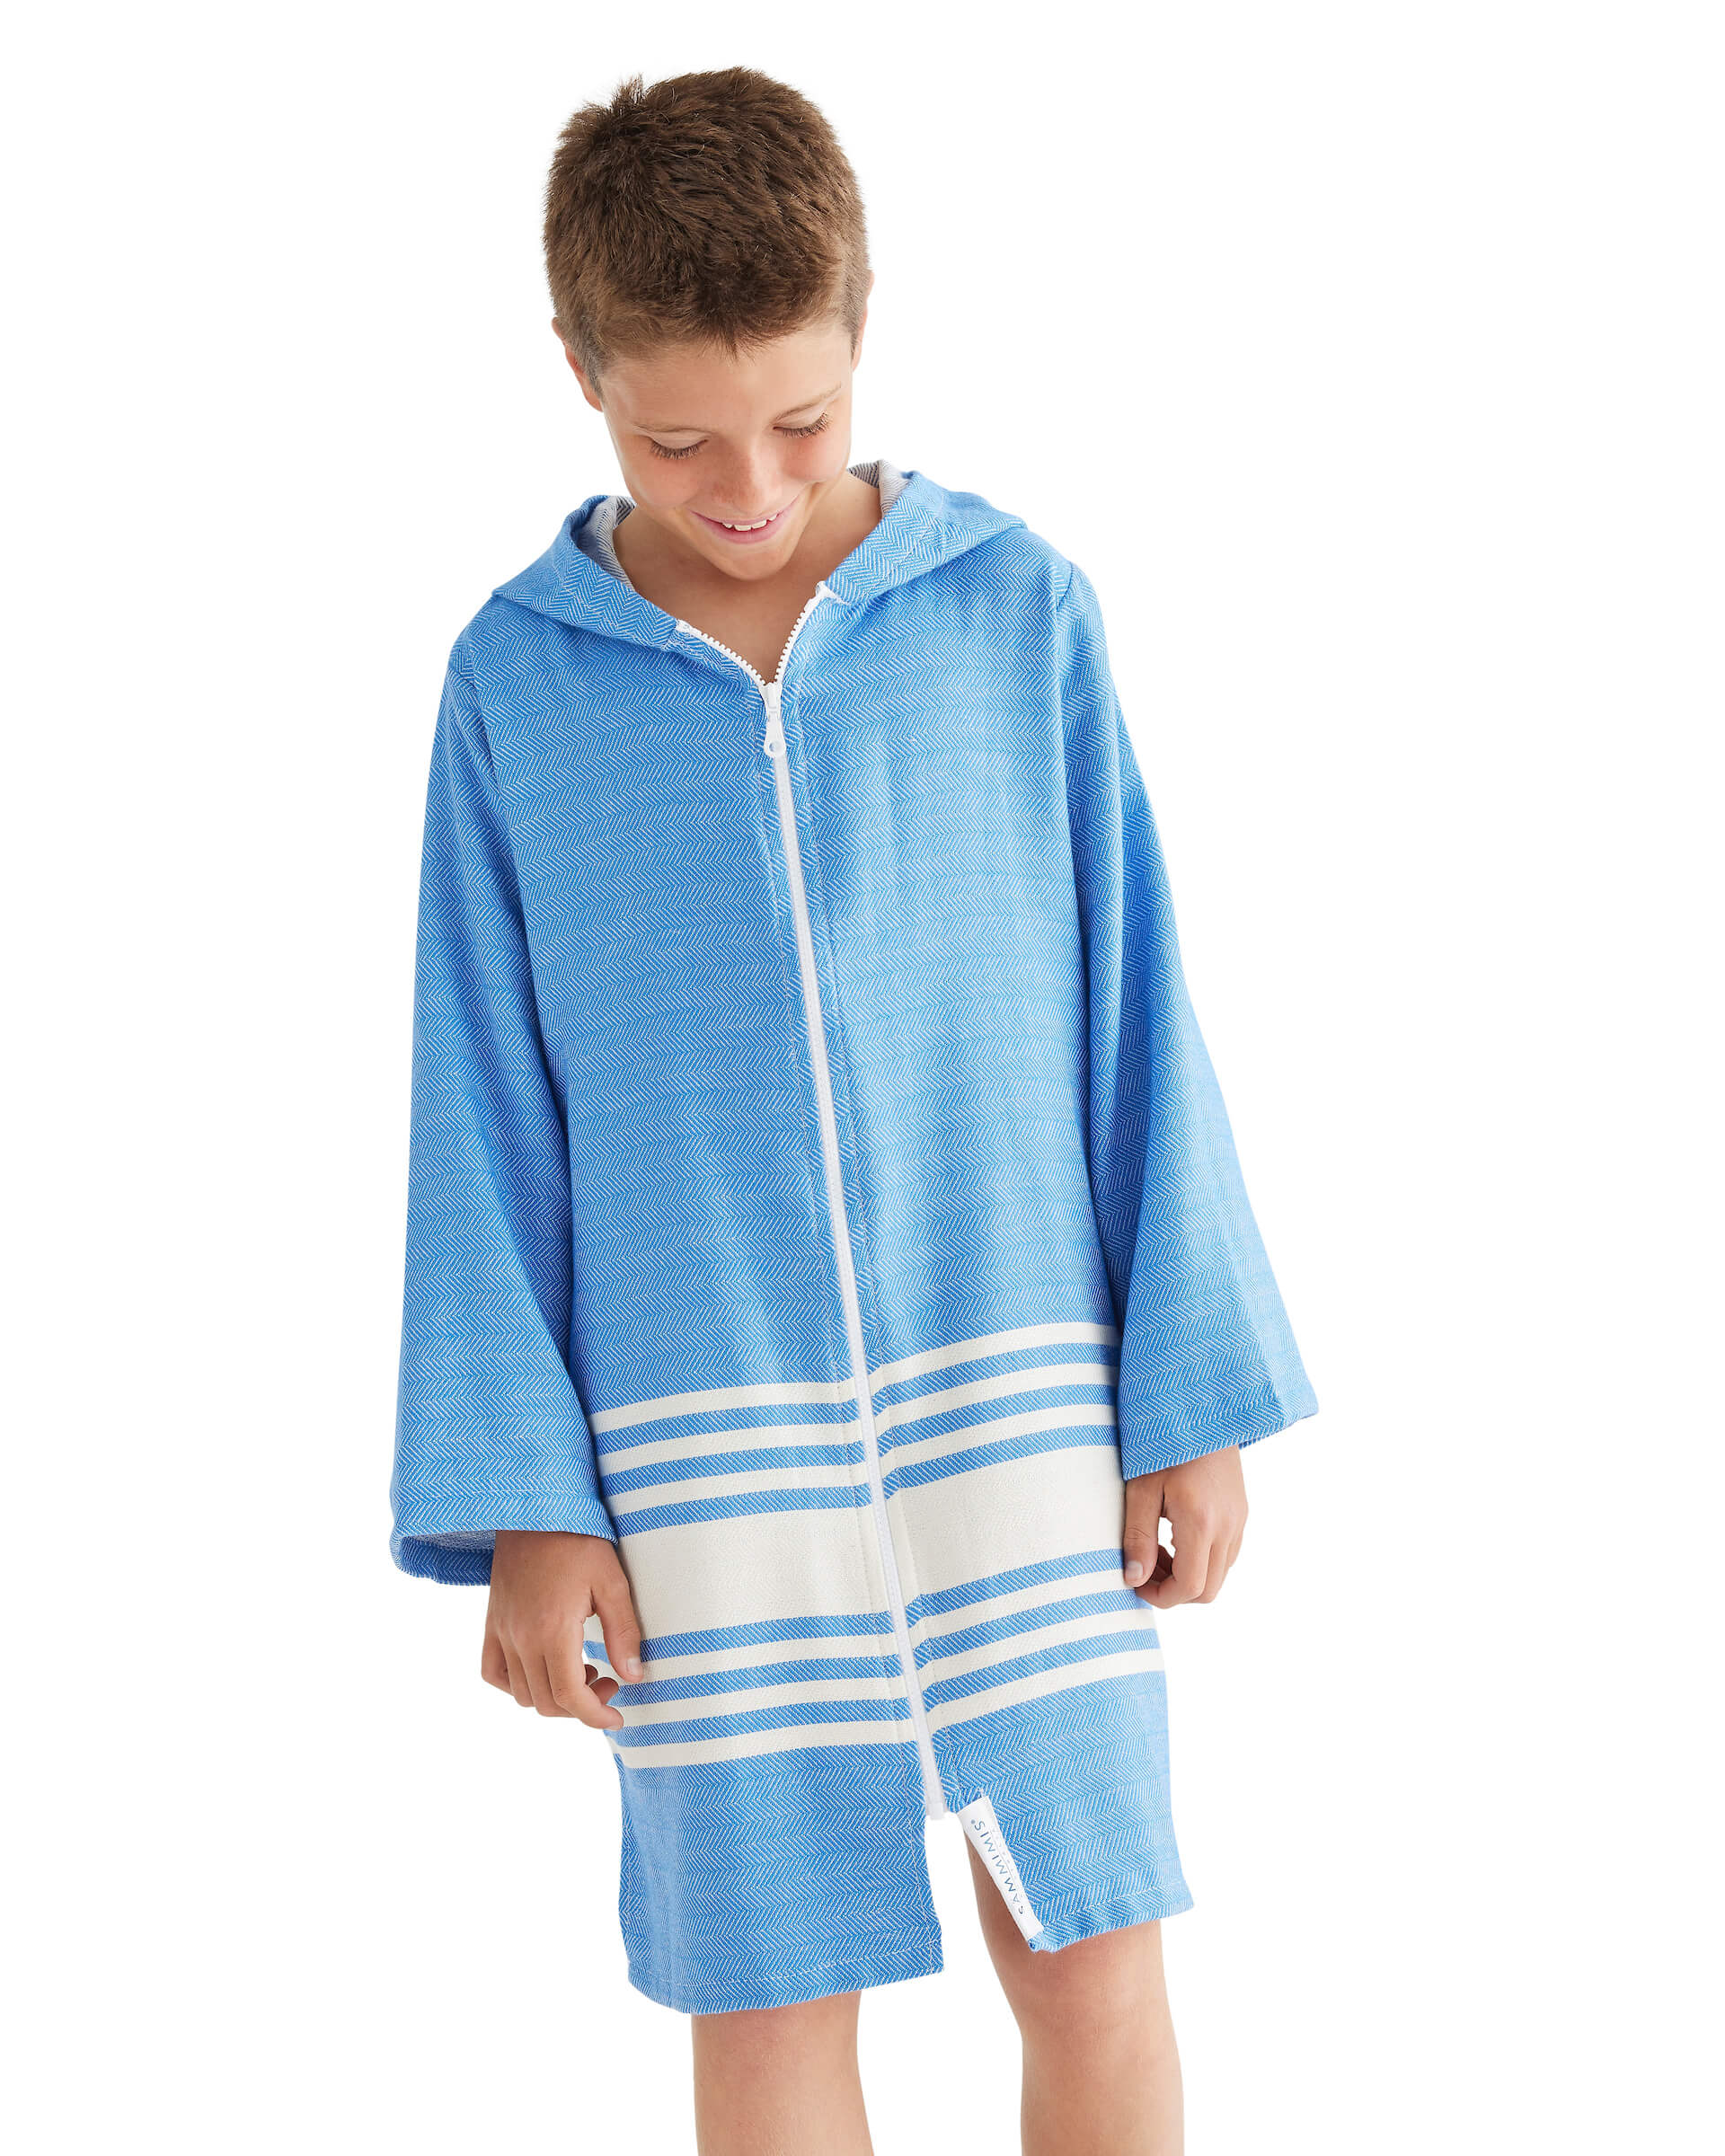 TASSOS Kids Hooded Towel: Royal Blue/White